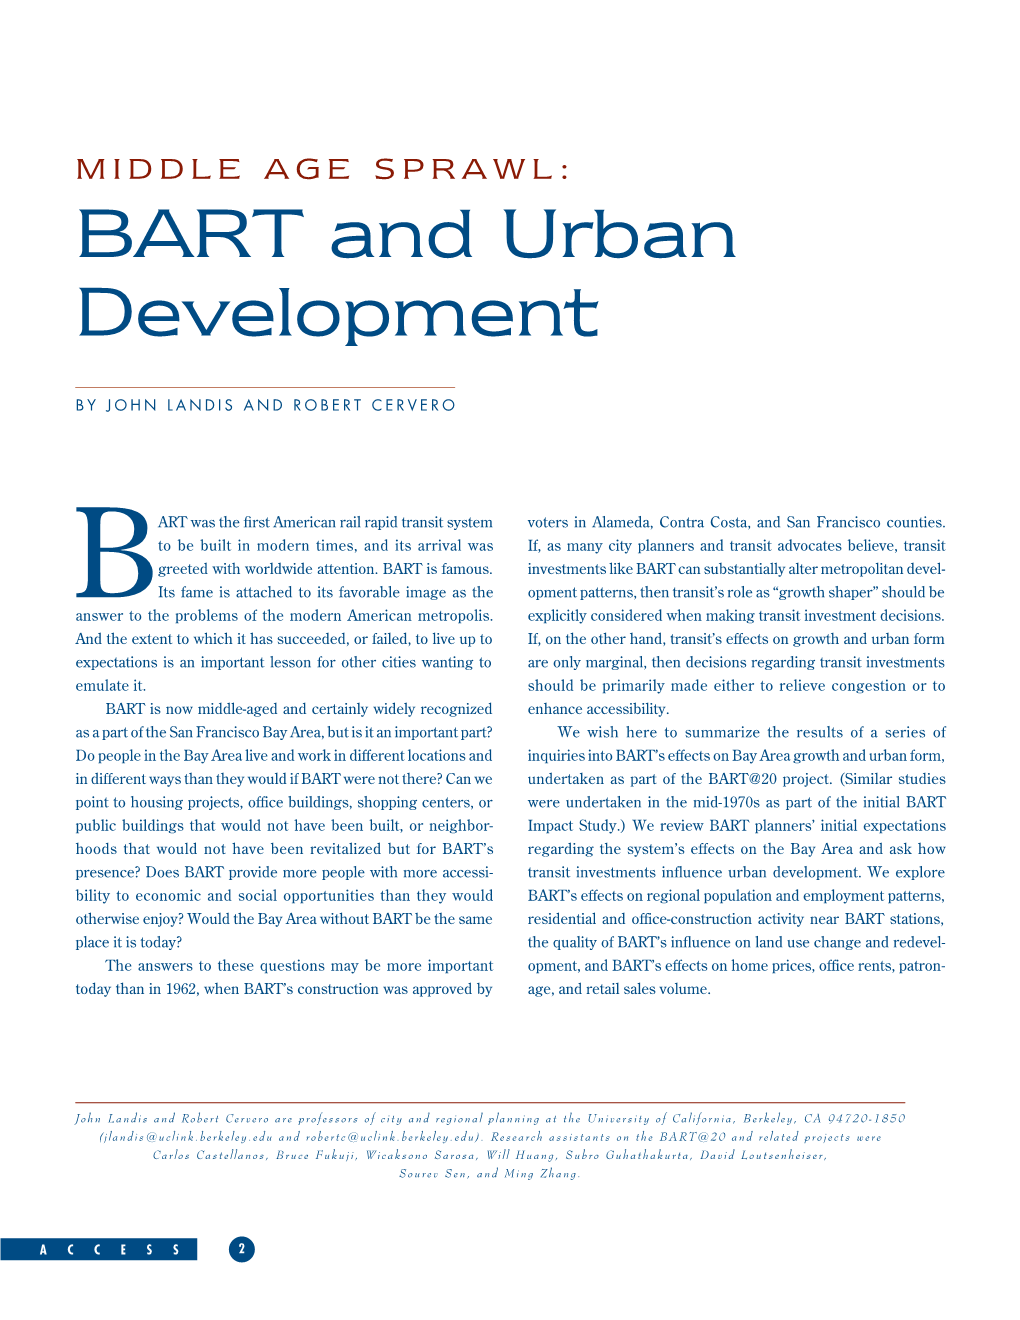 BART and Urban Development